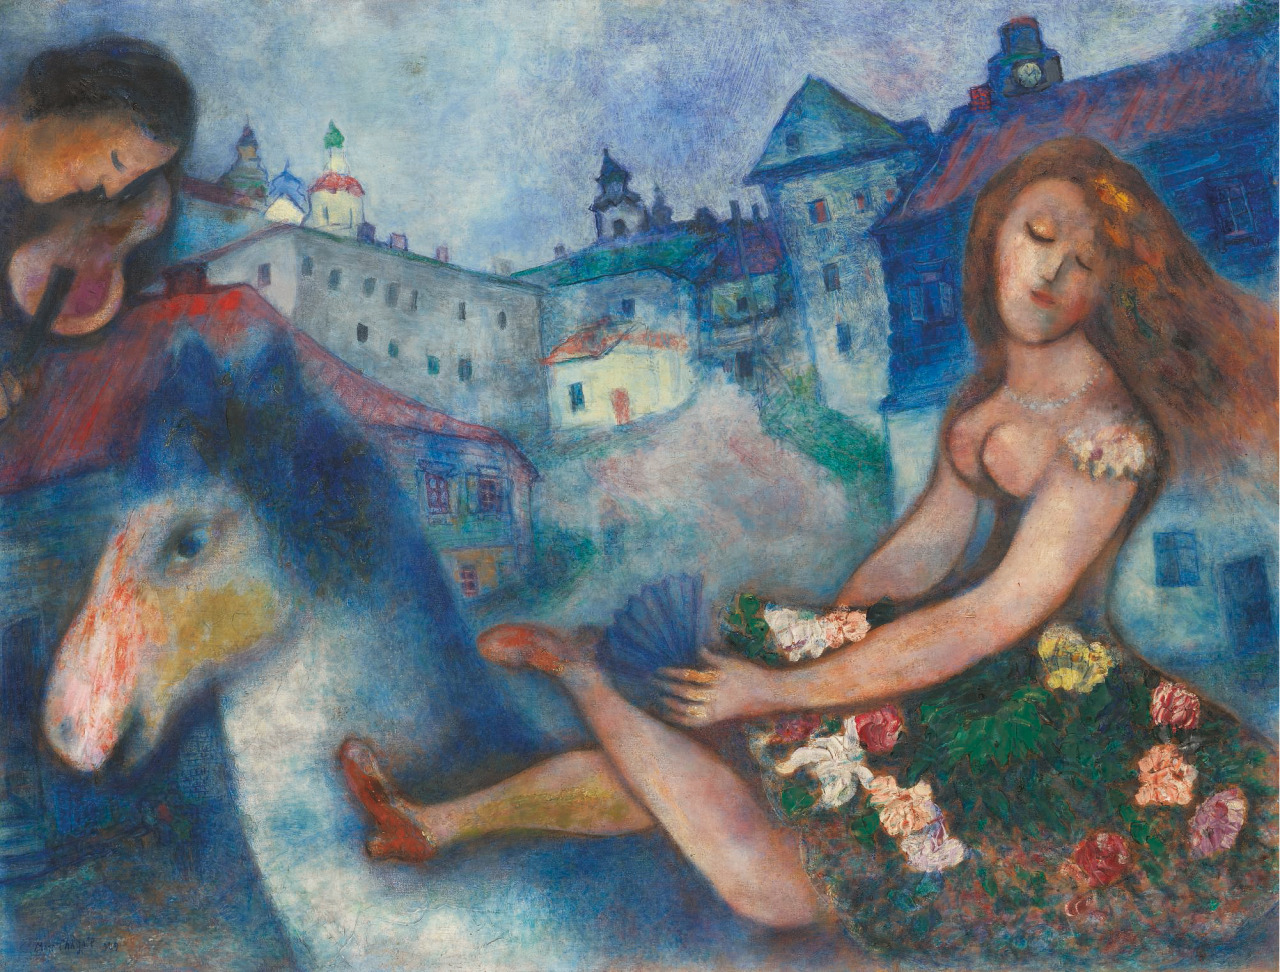 Marc+Chagall-1887-1985 (243).jpg